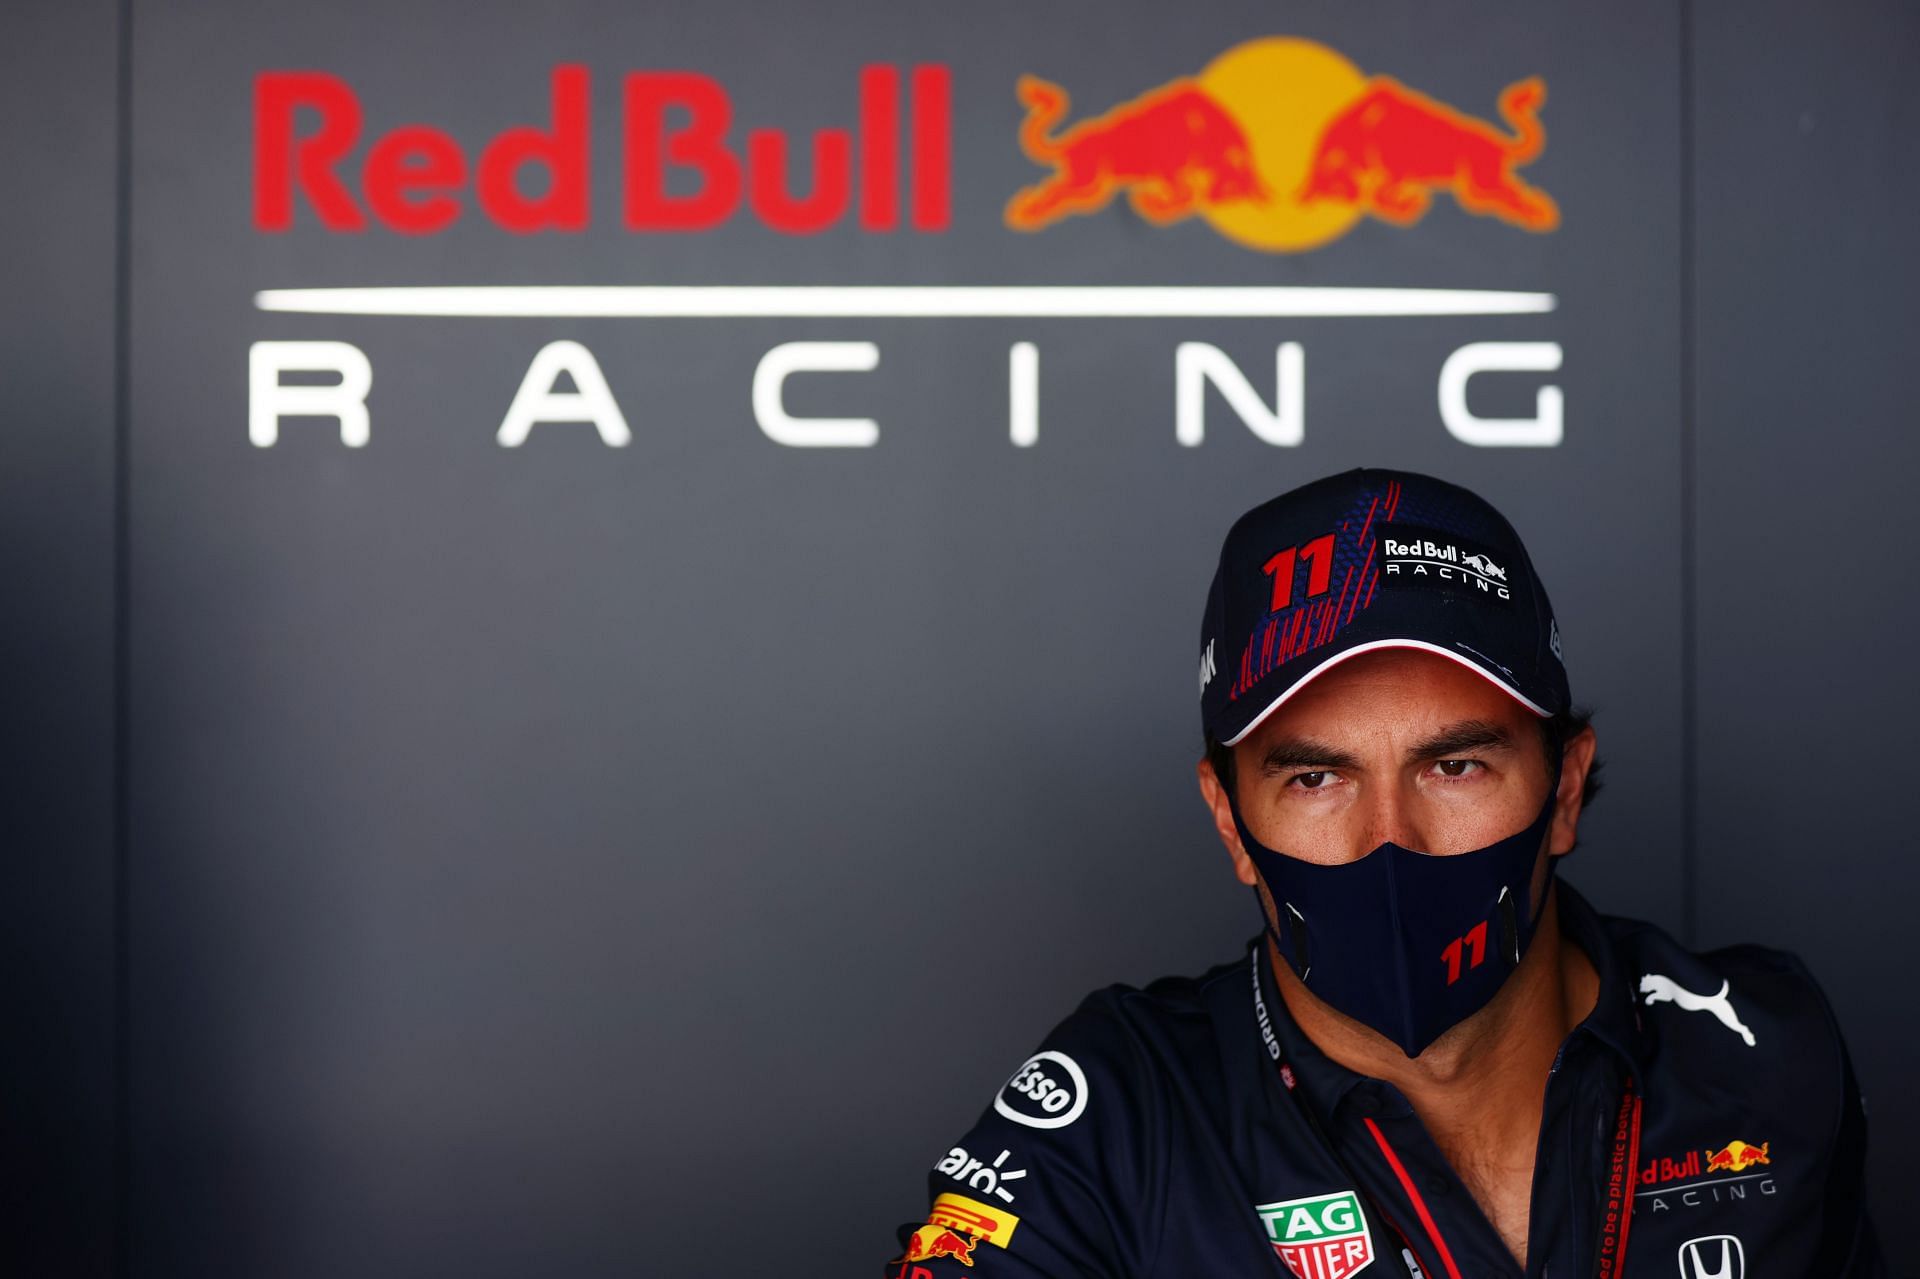 F1 Grand Prix of Abu Dhabi - Sergio Perez in the Red Bull garage